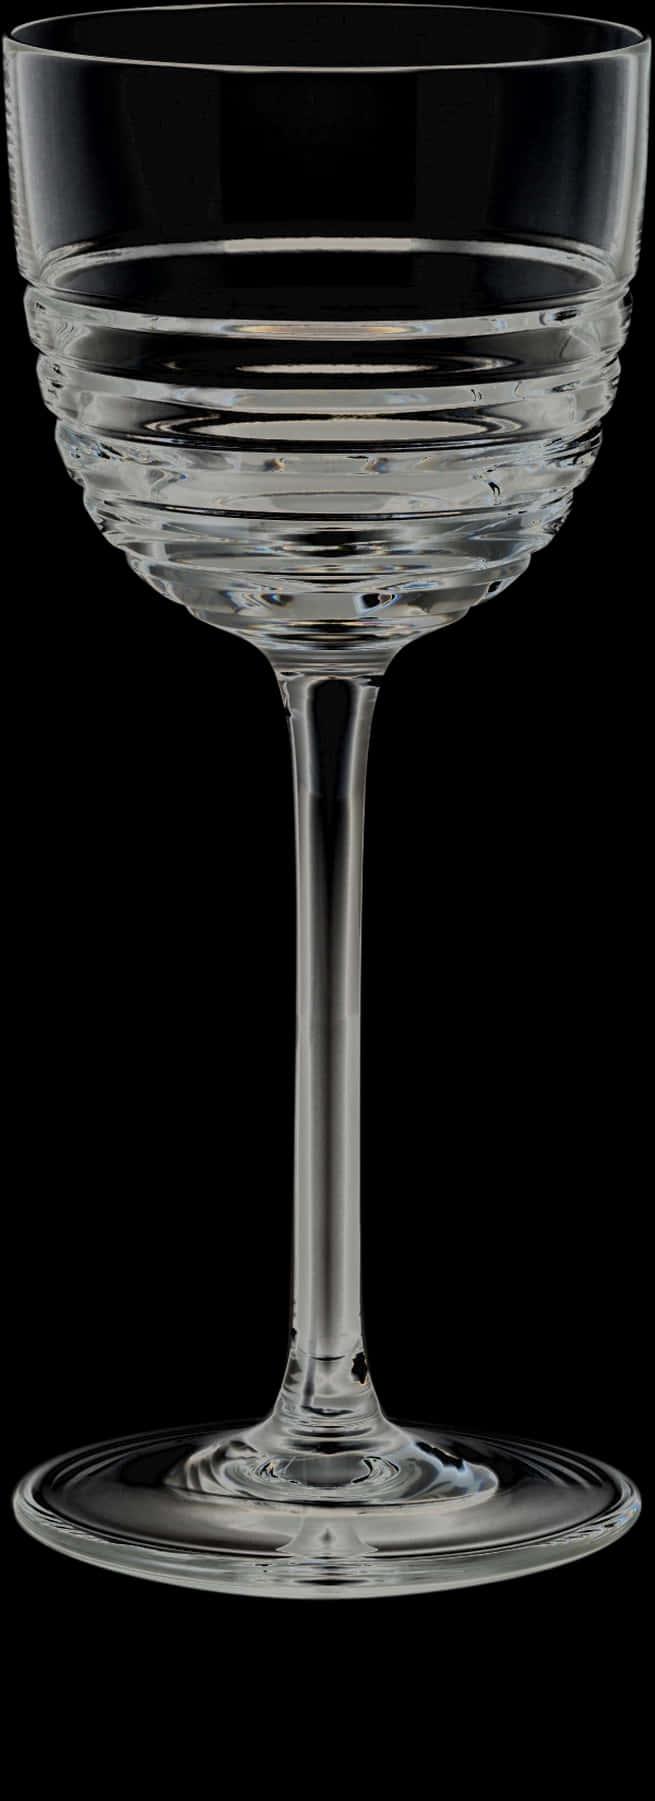 Elegant Stemmed Glassware.jpg PNG